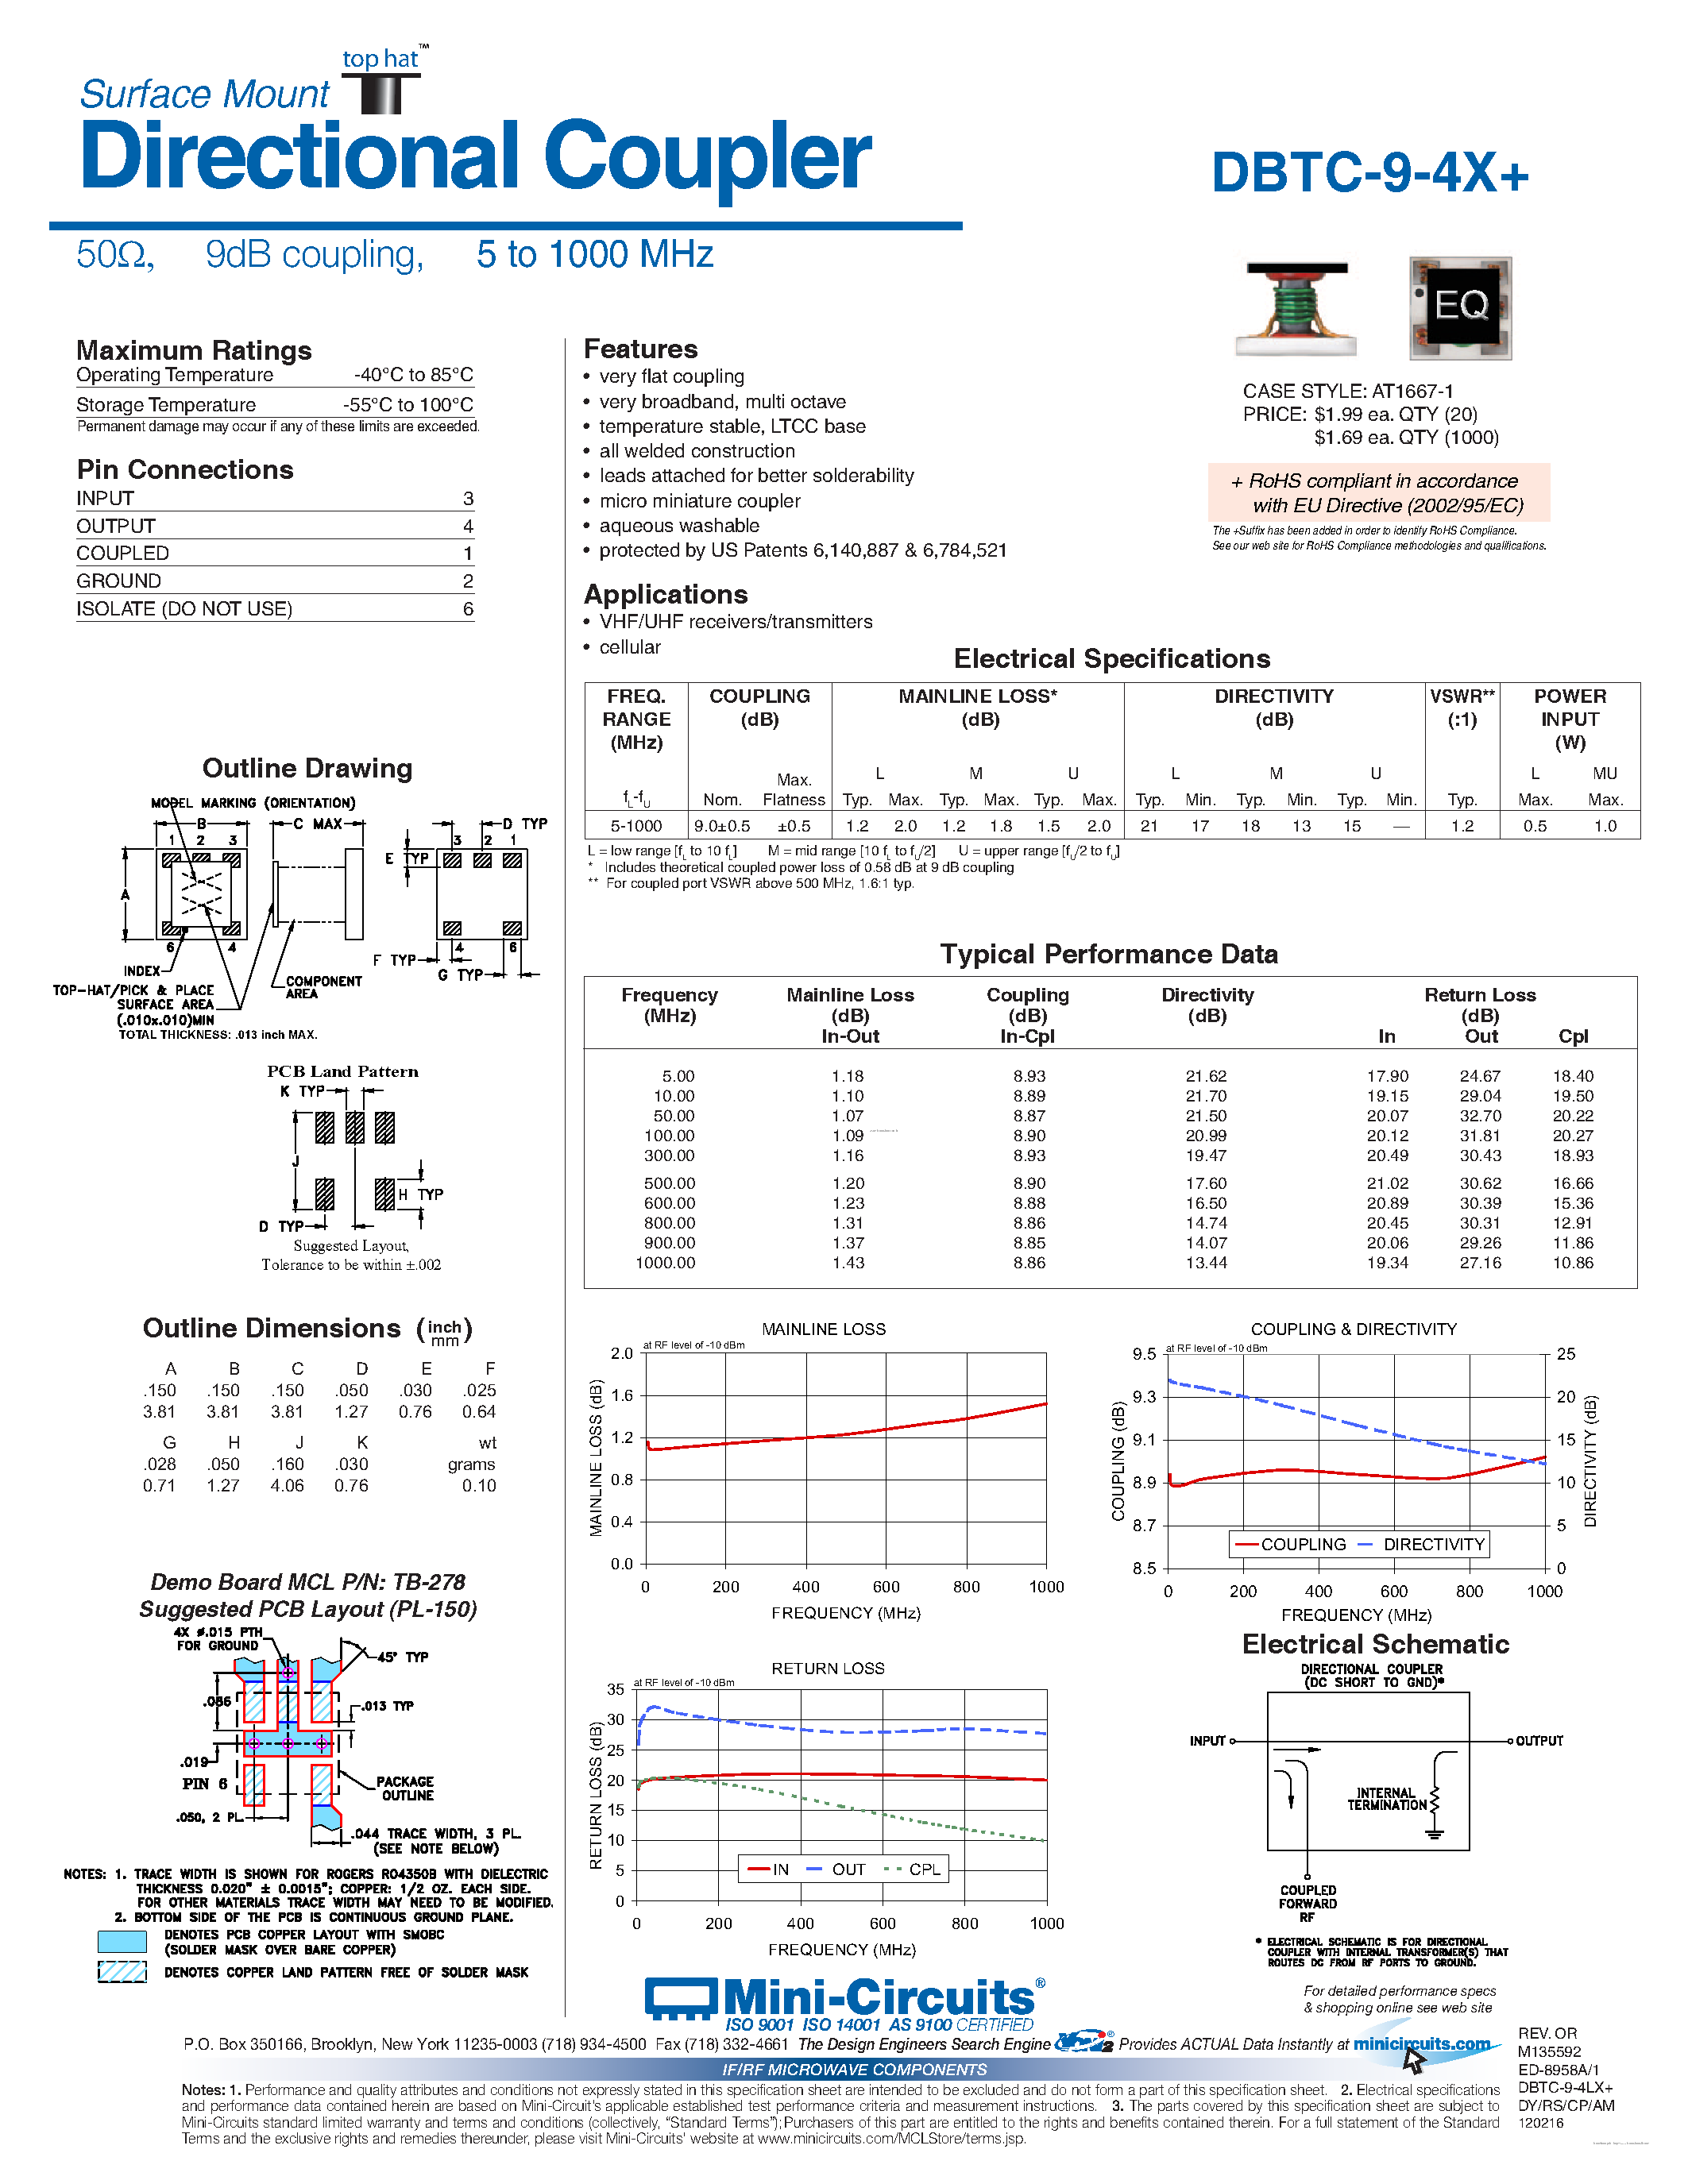 Datasheet DBTC-9-4X+ - Directional Coupler page 1